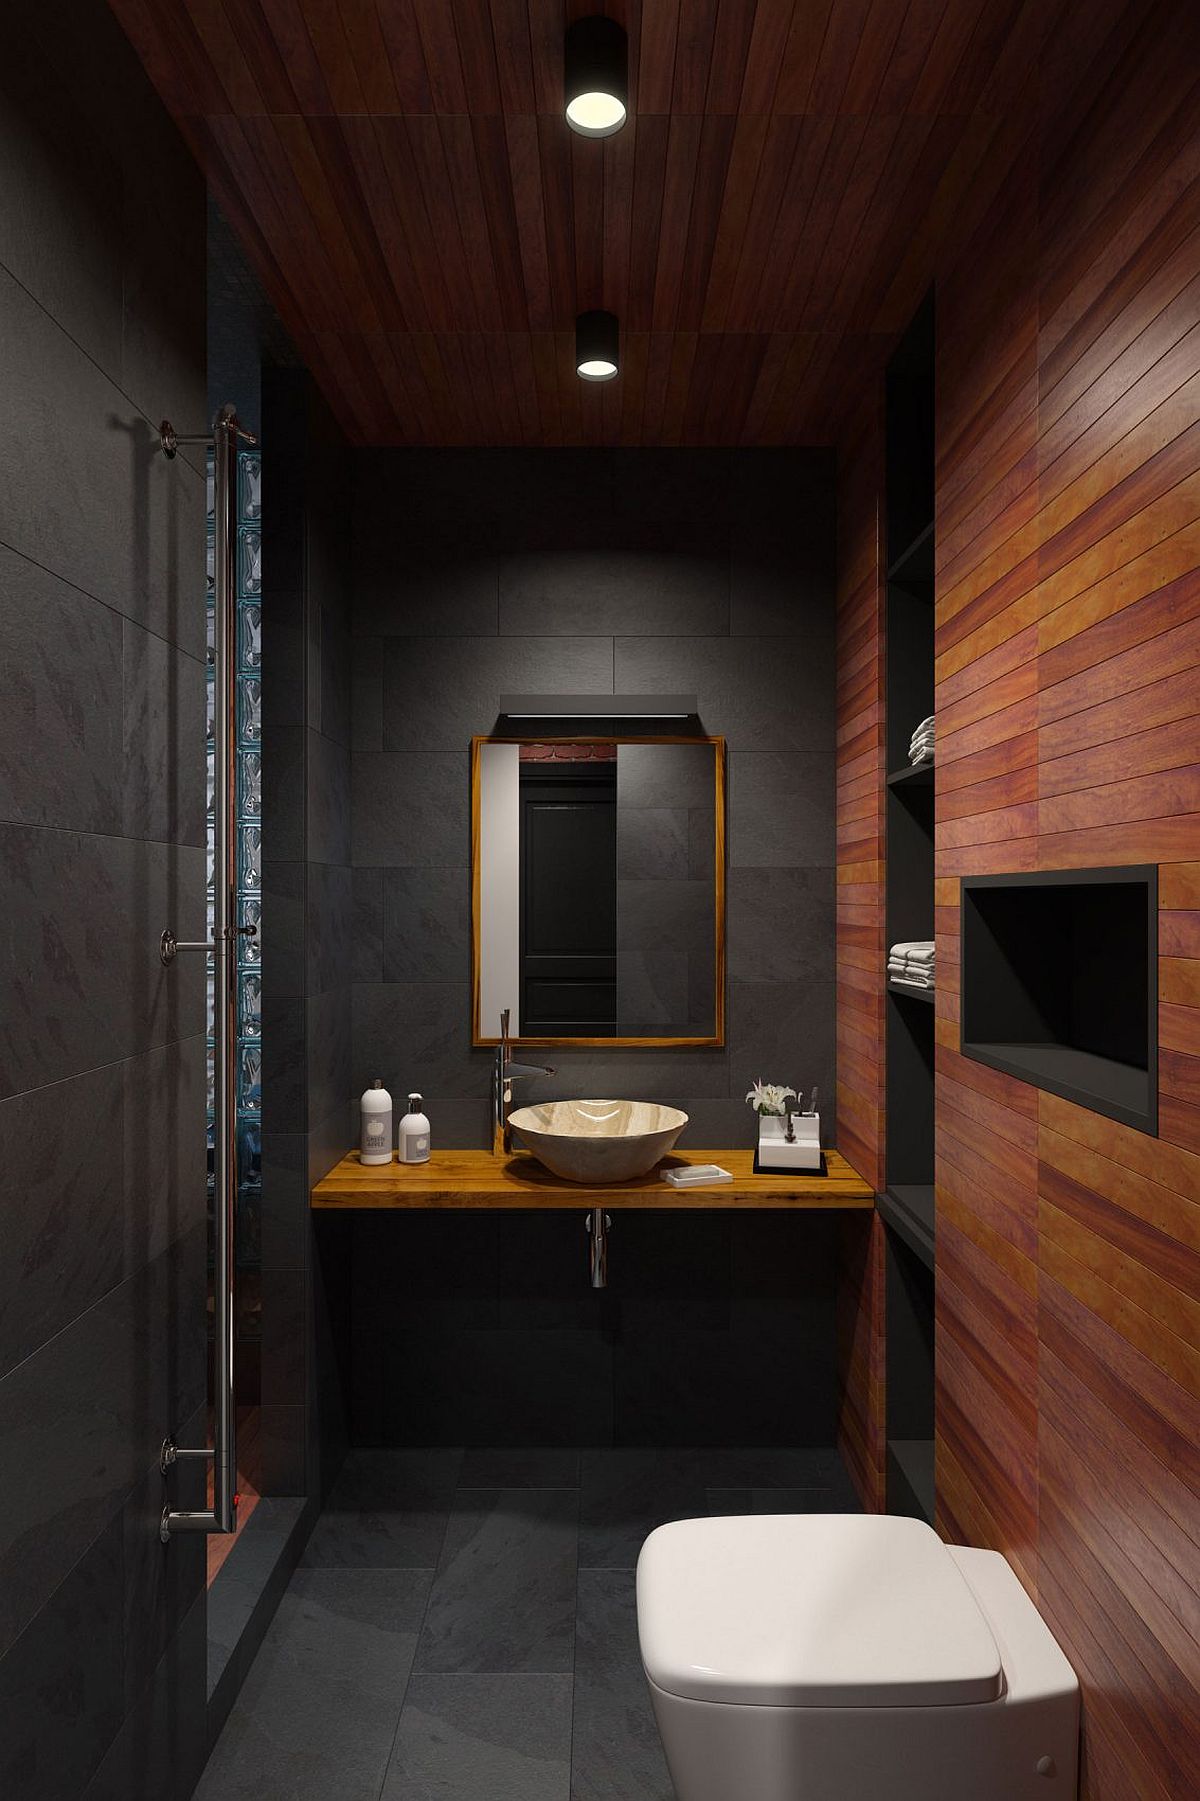 bachelor industrial pad bathroom loft bedroom modern slate tiny banheiro preto decorado savvy innovative space does stylish related